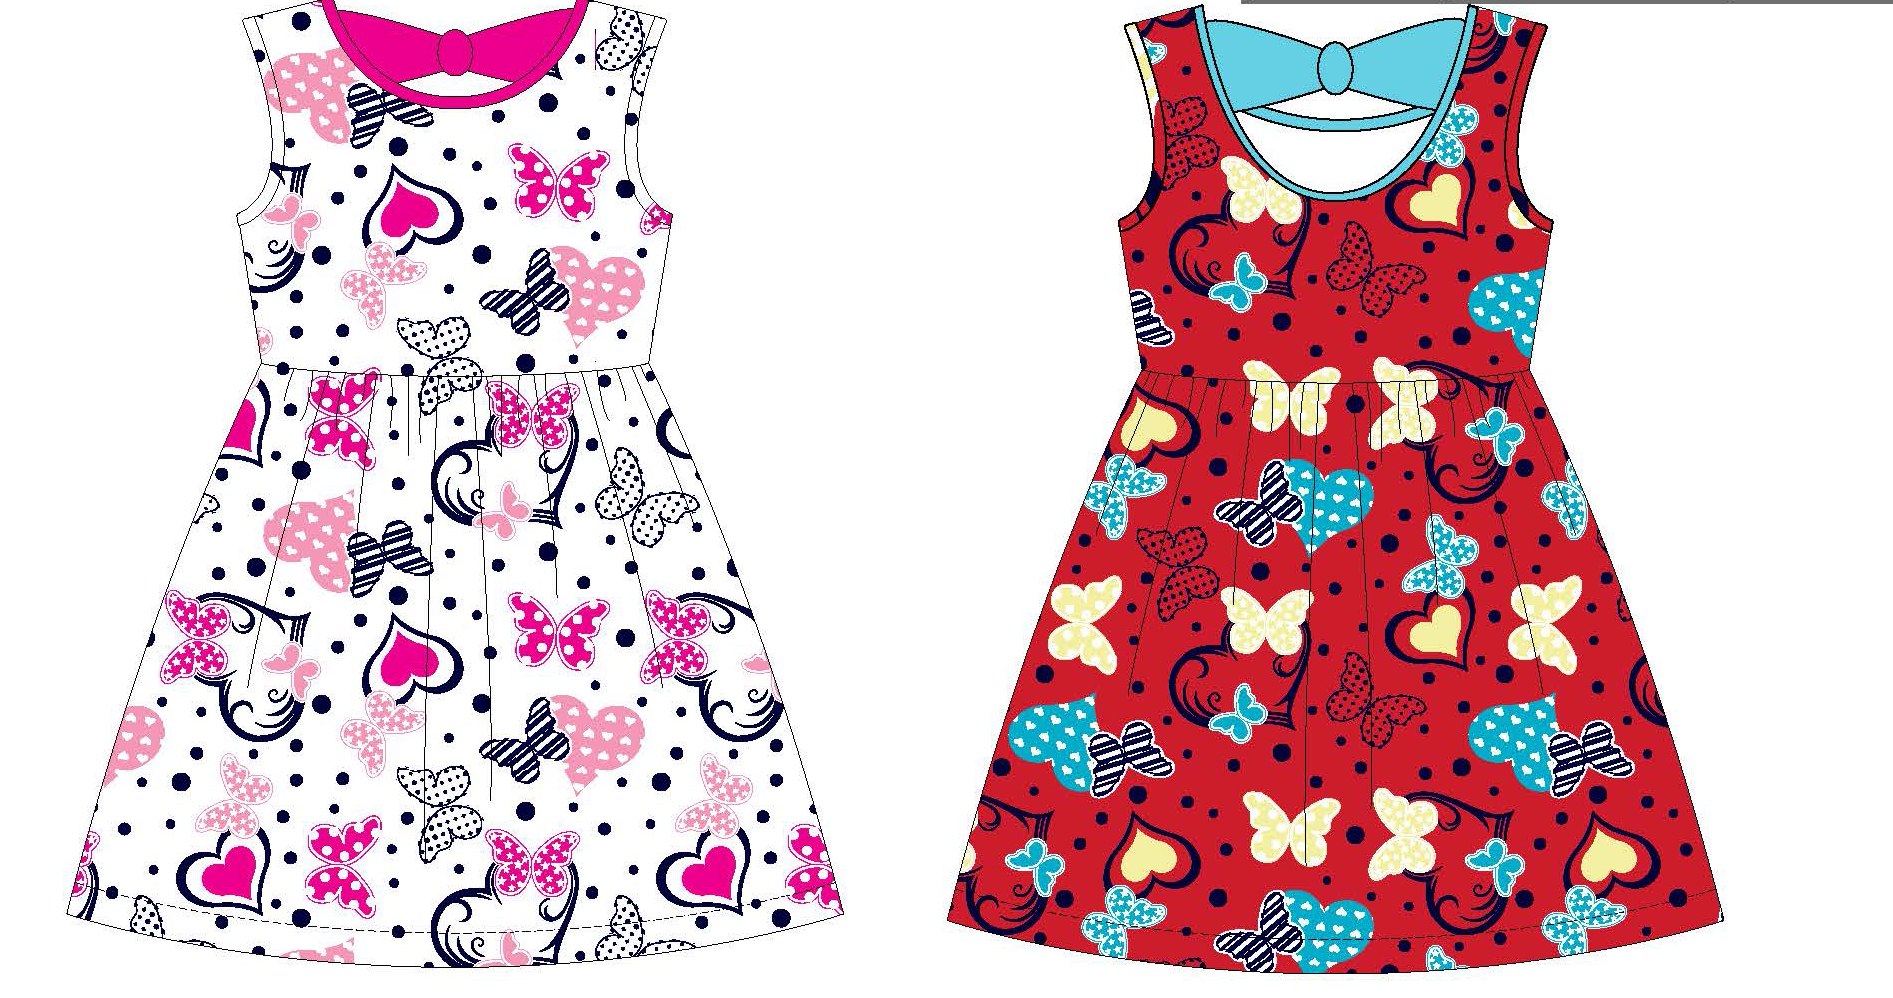 Toddler Girl's Sleeveless Knit Swing DRESS w/ Butterfly & Heart Print - Size 2T-4T